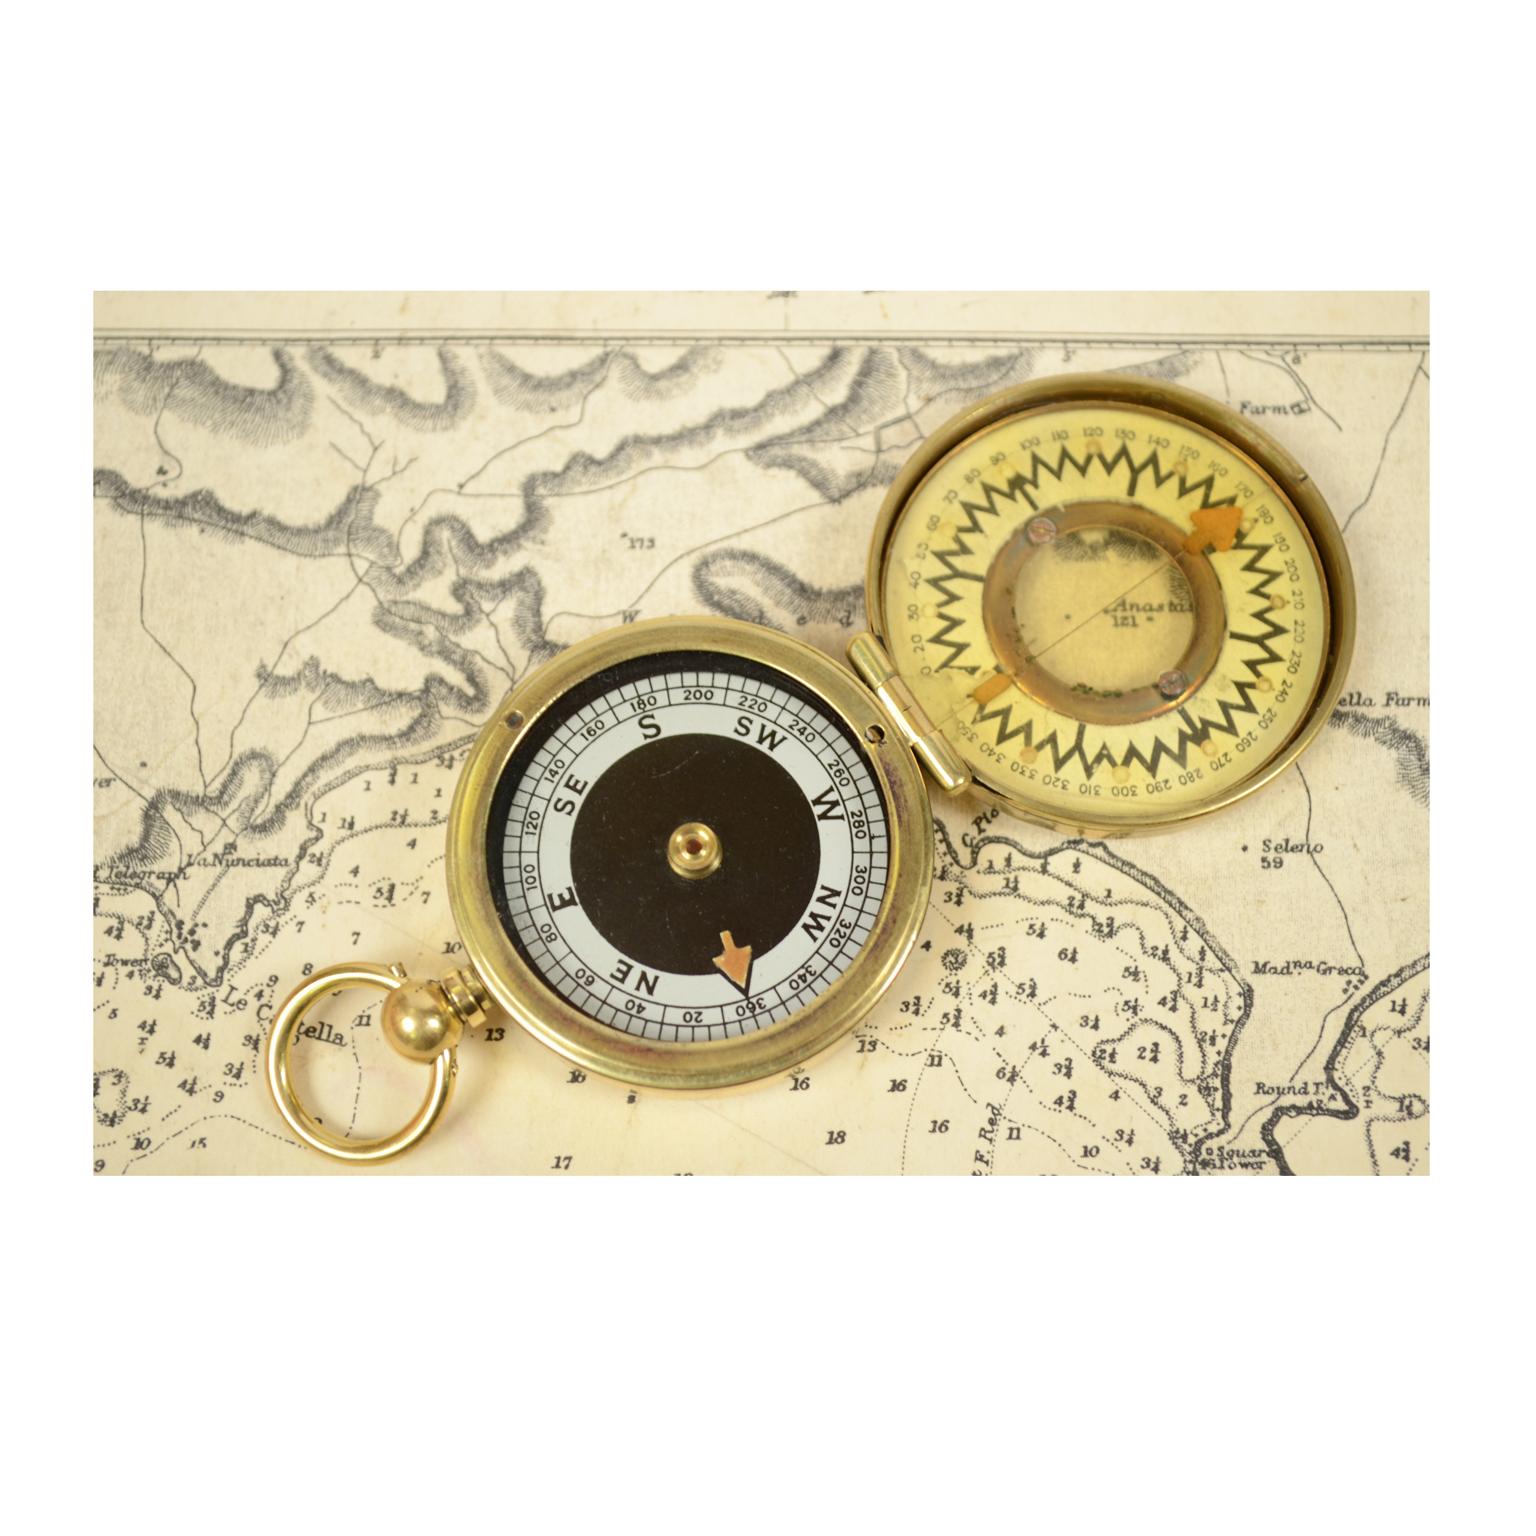 British Brass Survey Compass the Magnapole